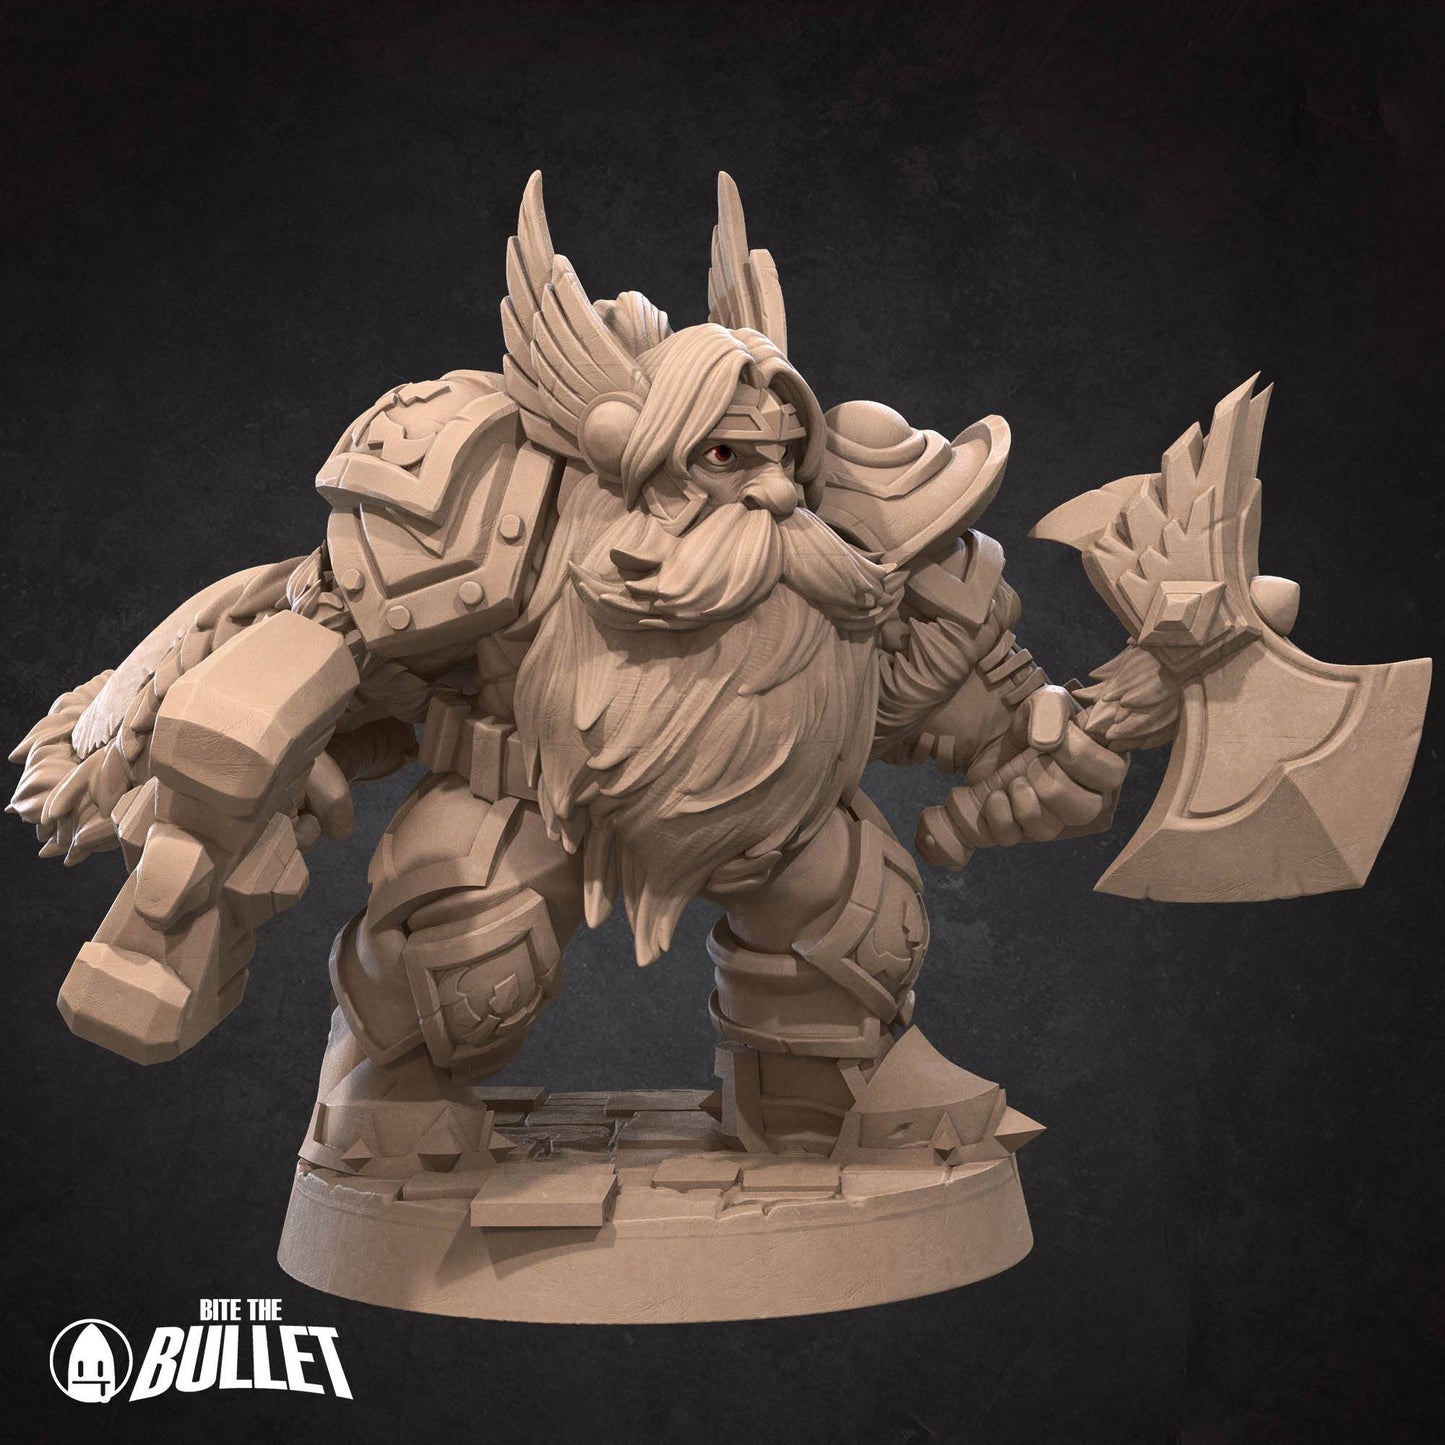 Dwarf General | D&D Miniature TTRPG Character | Bite the Bullet - Tattles Told 3D